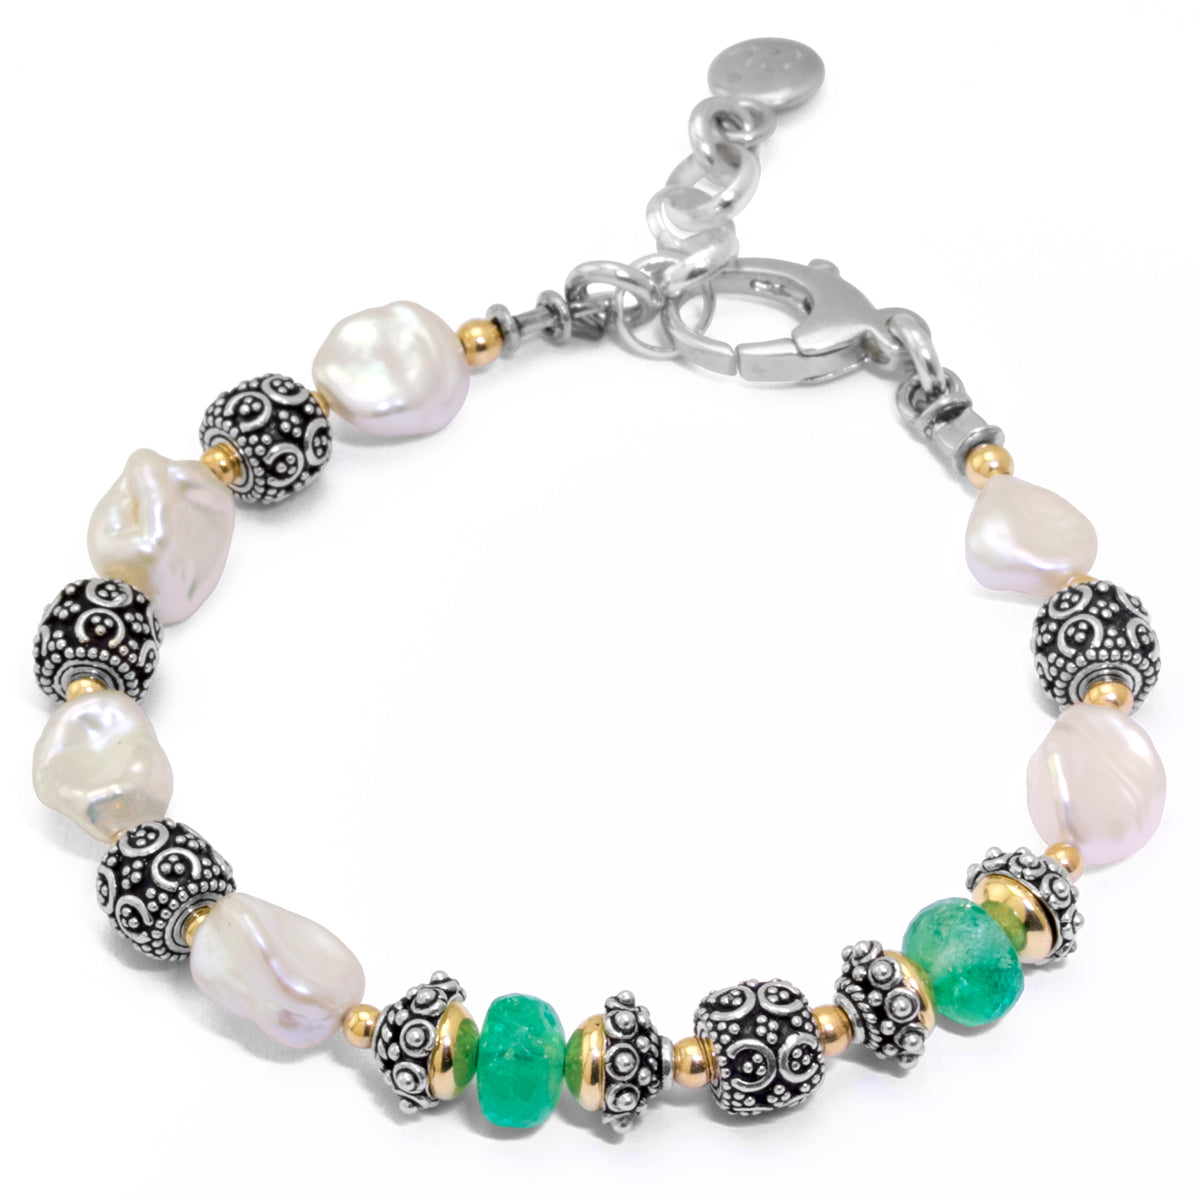 Freshwater Keishi Pearl & Emerald Bracelet